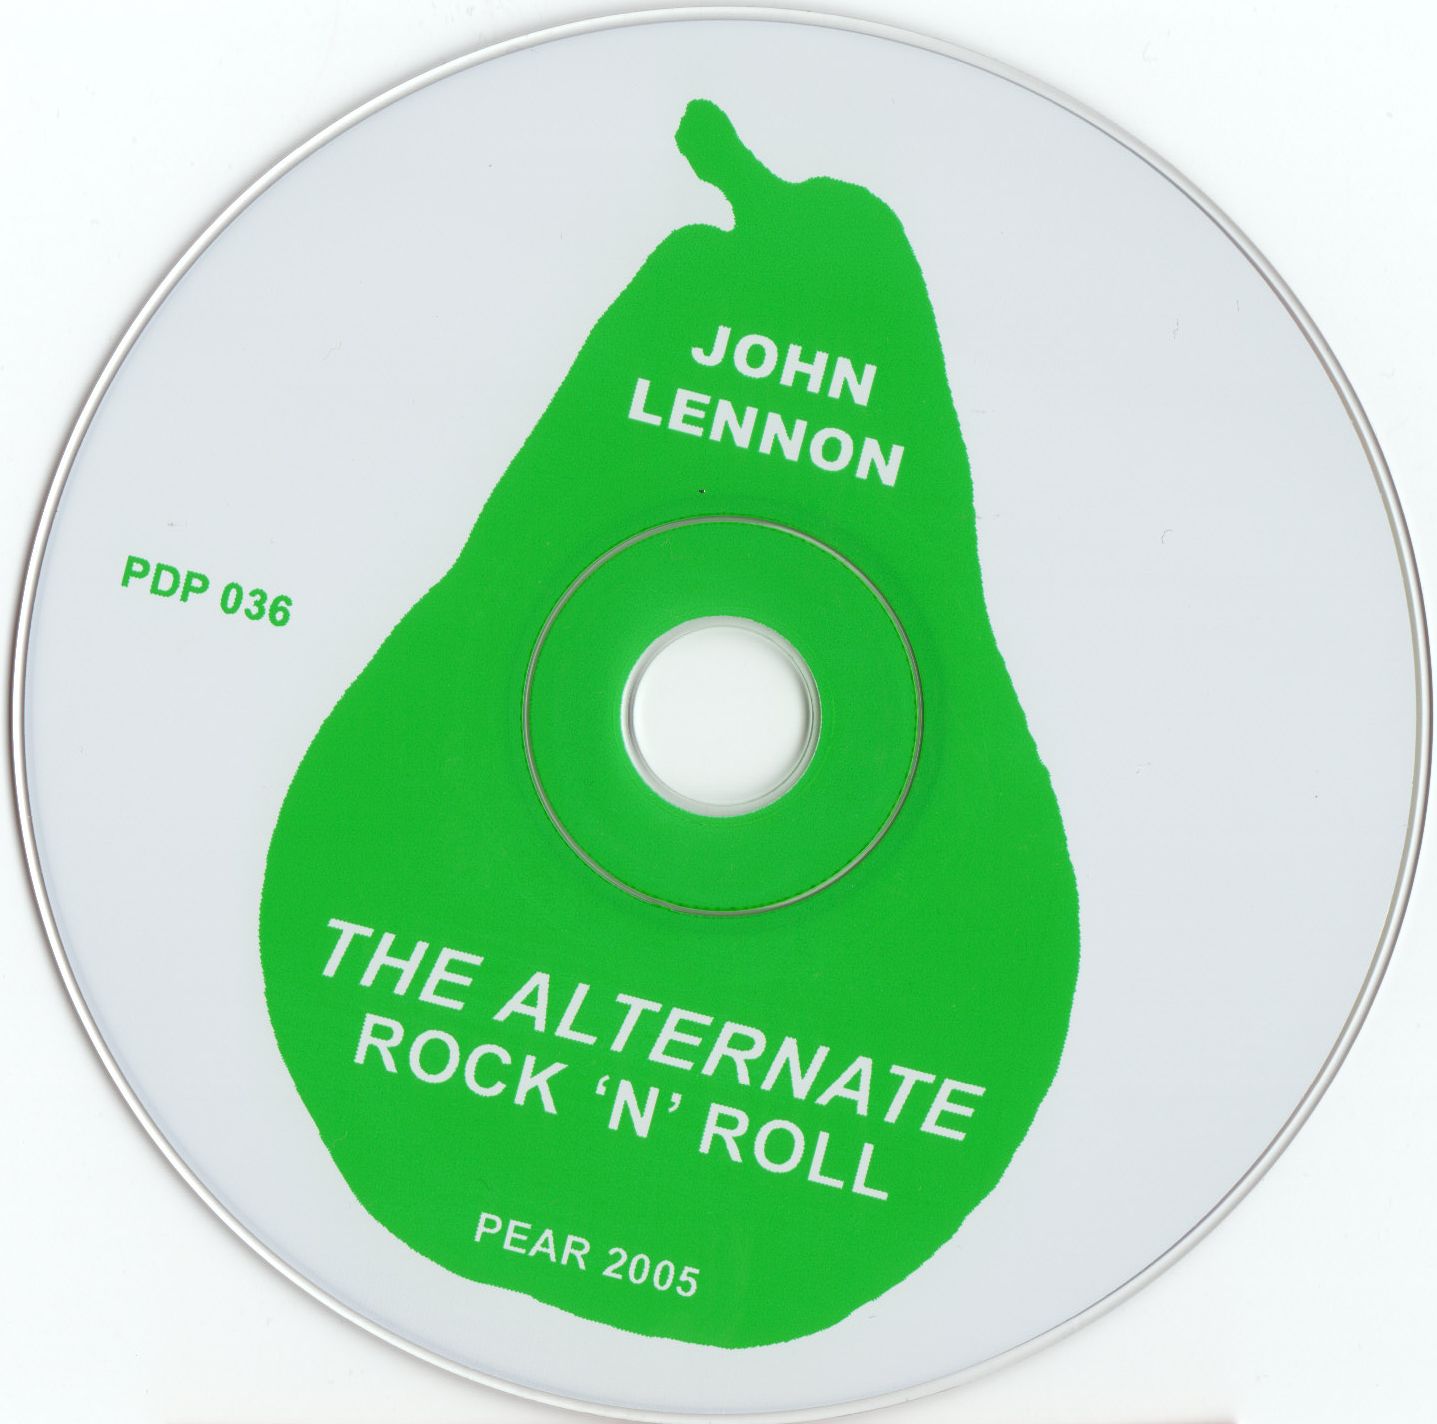 JohnLennon-AlternateRockNRoll (5).jpg